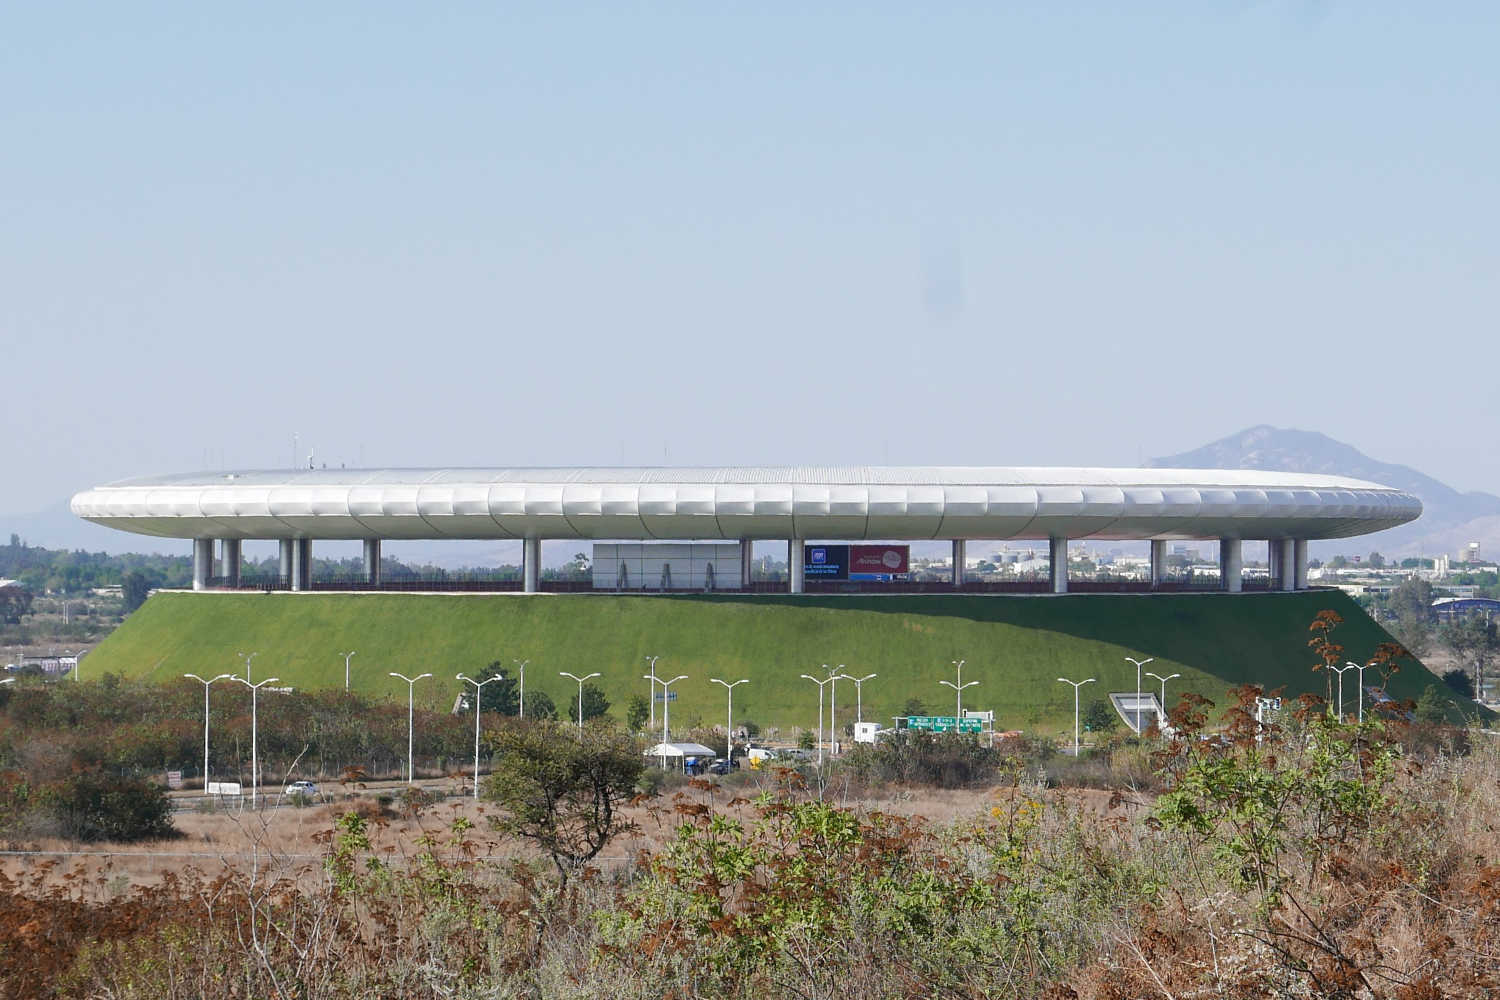 The flying roof of Chivas stadium in Guadalajara